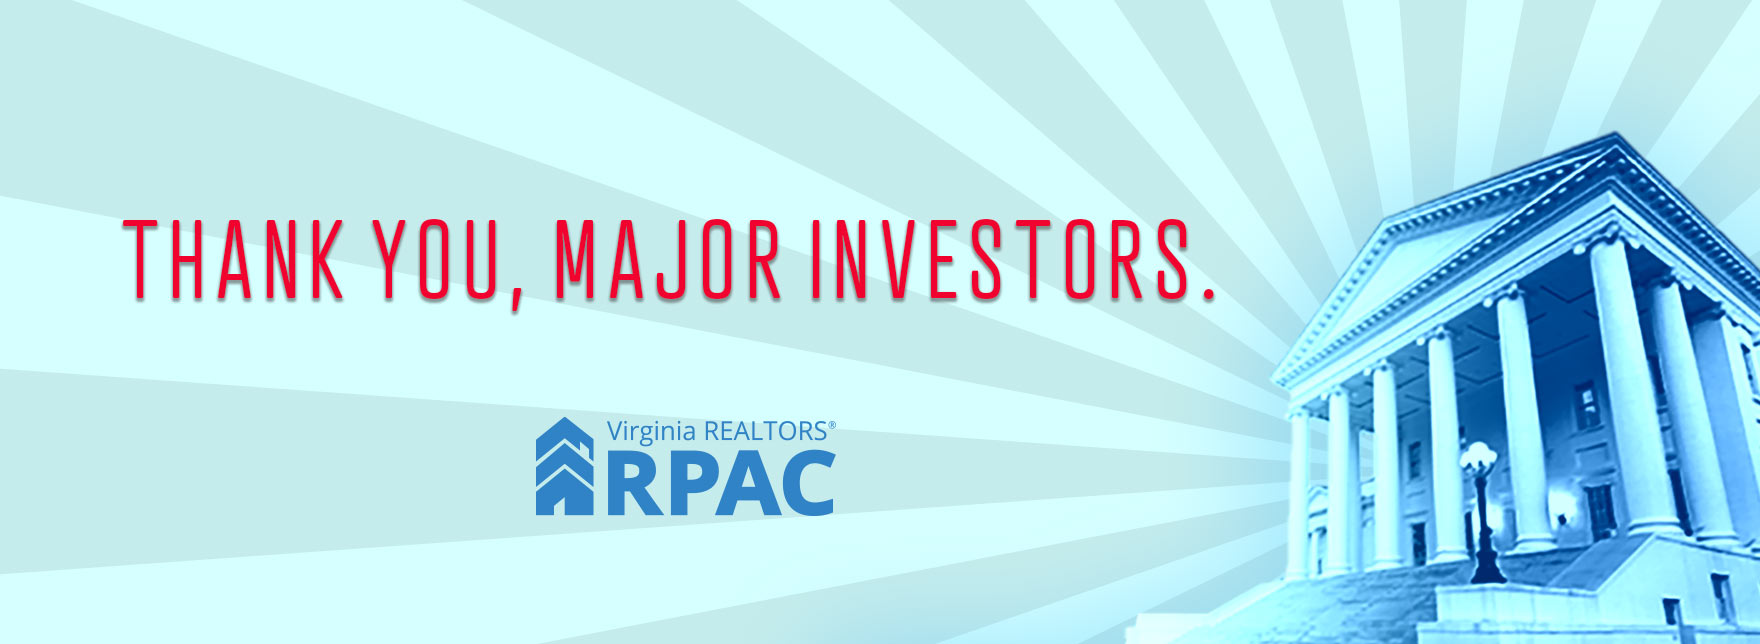 Thank You, RPAC Major Investors